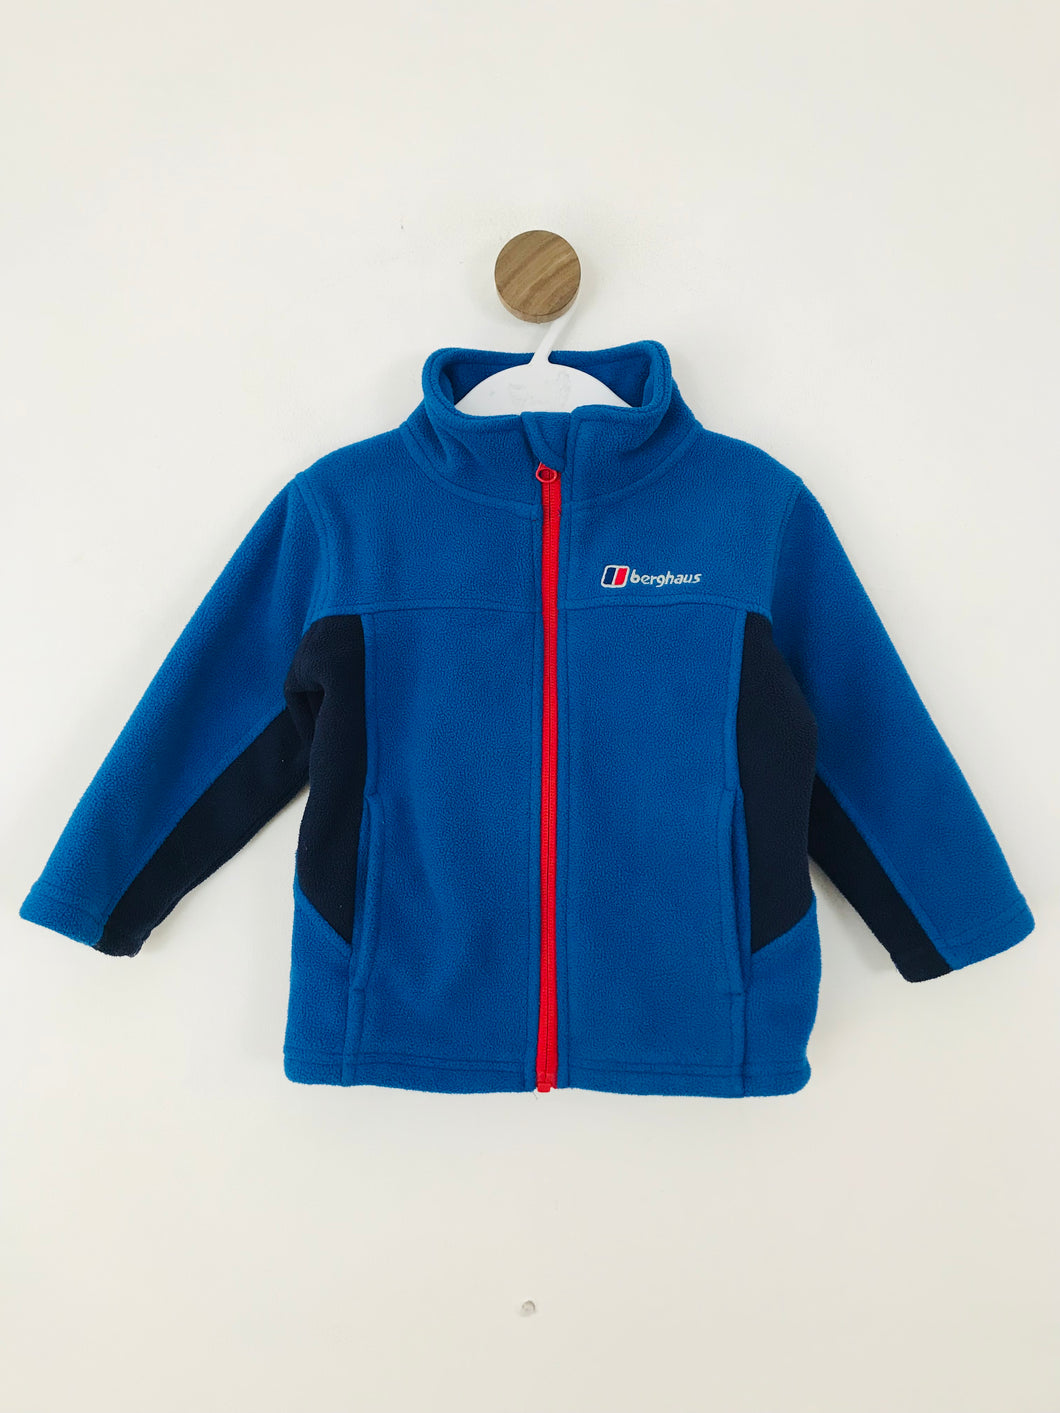 Berghaus Kid's Zip Up Fleece Jacket | 3-4 Years | Blue